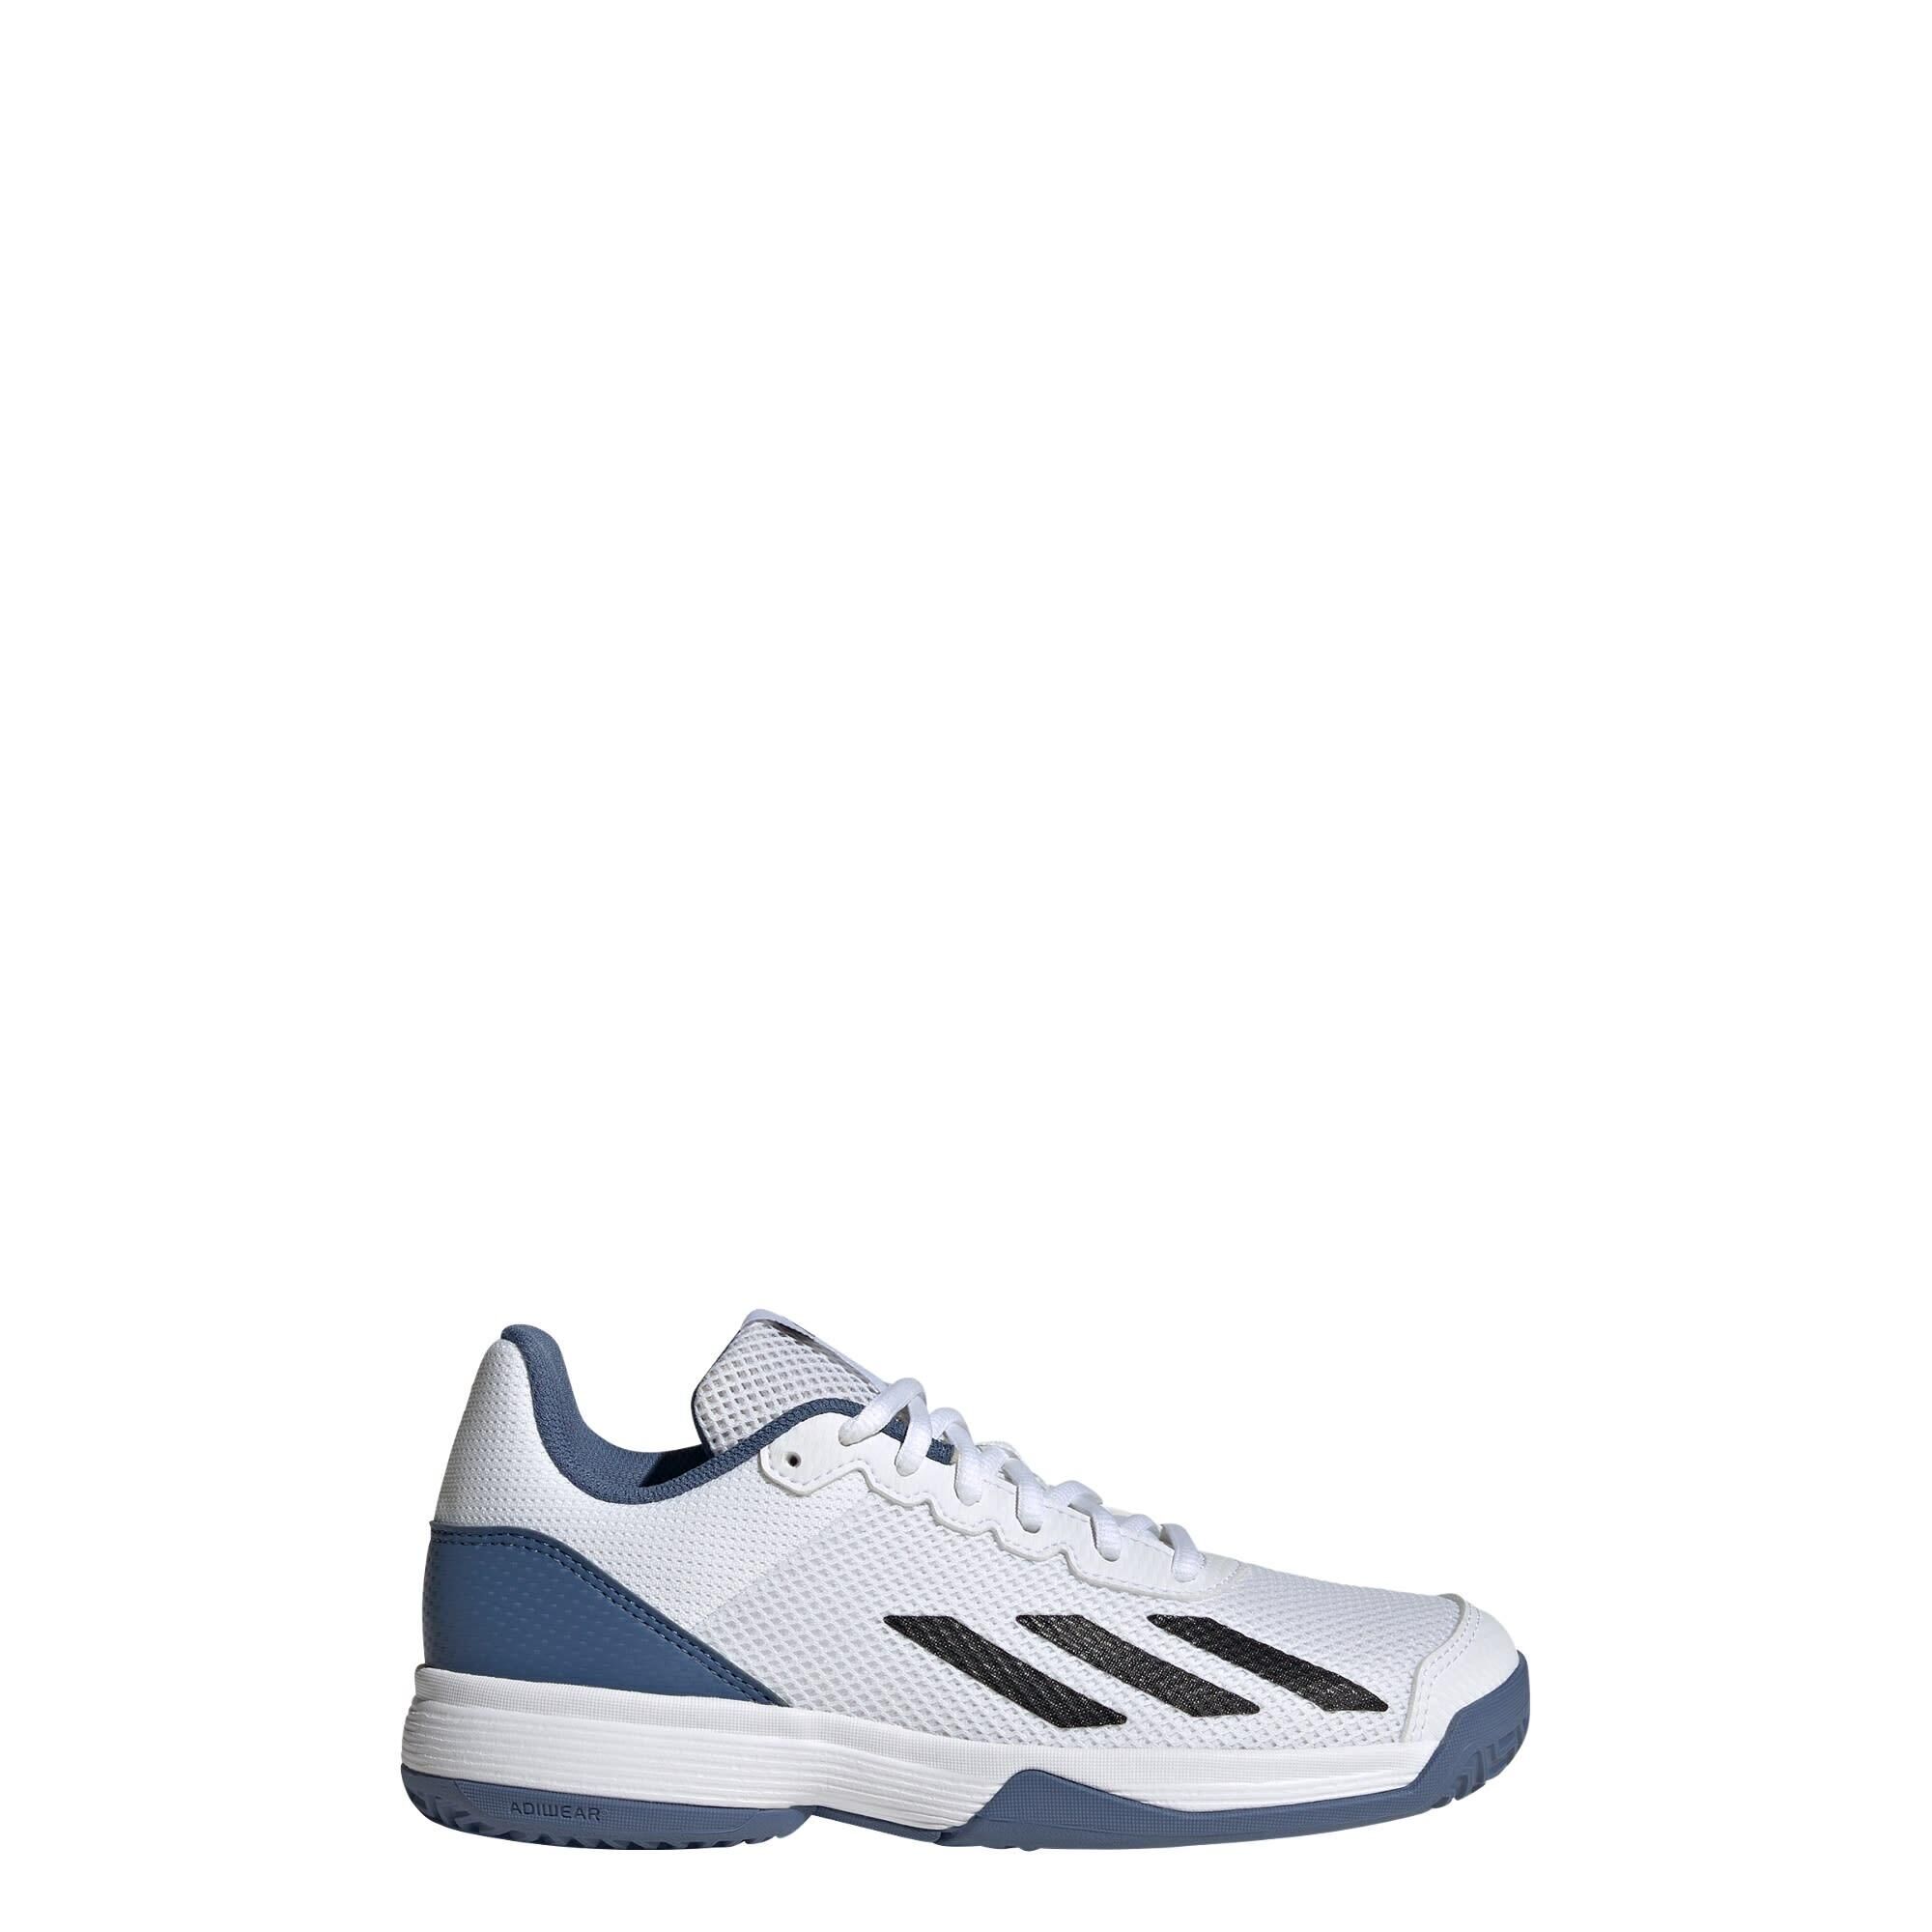 ADIDAS Courtflash Tennis Shoes